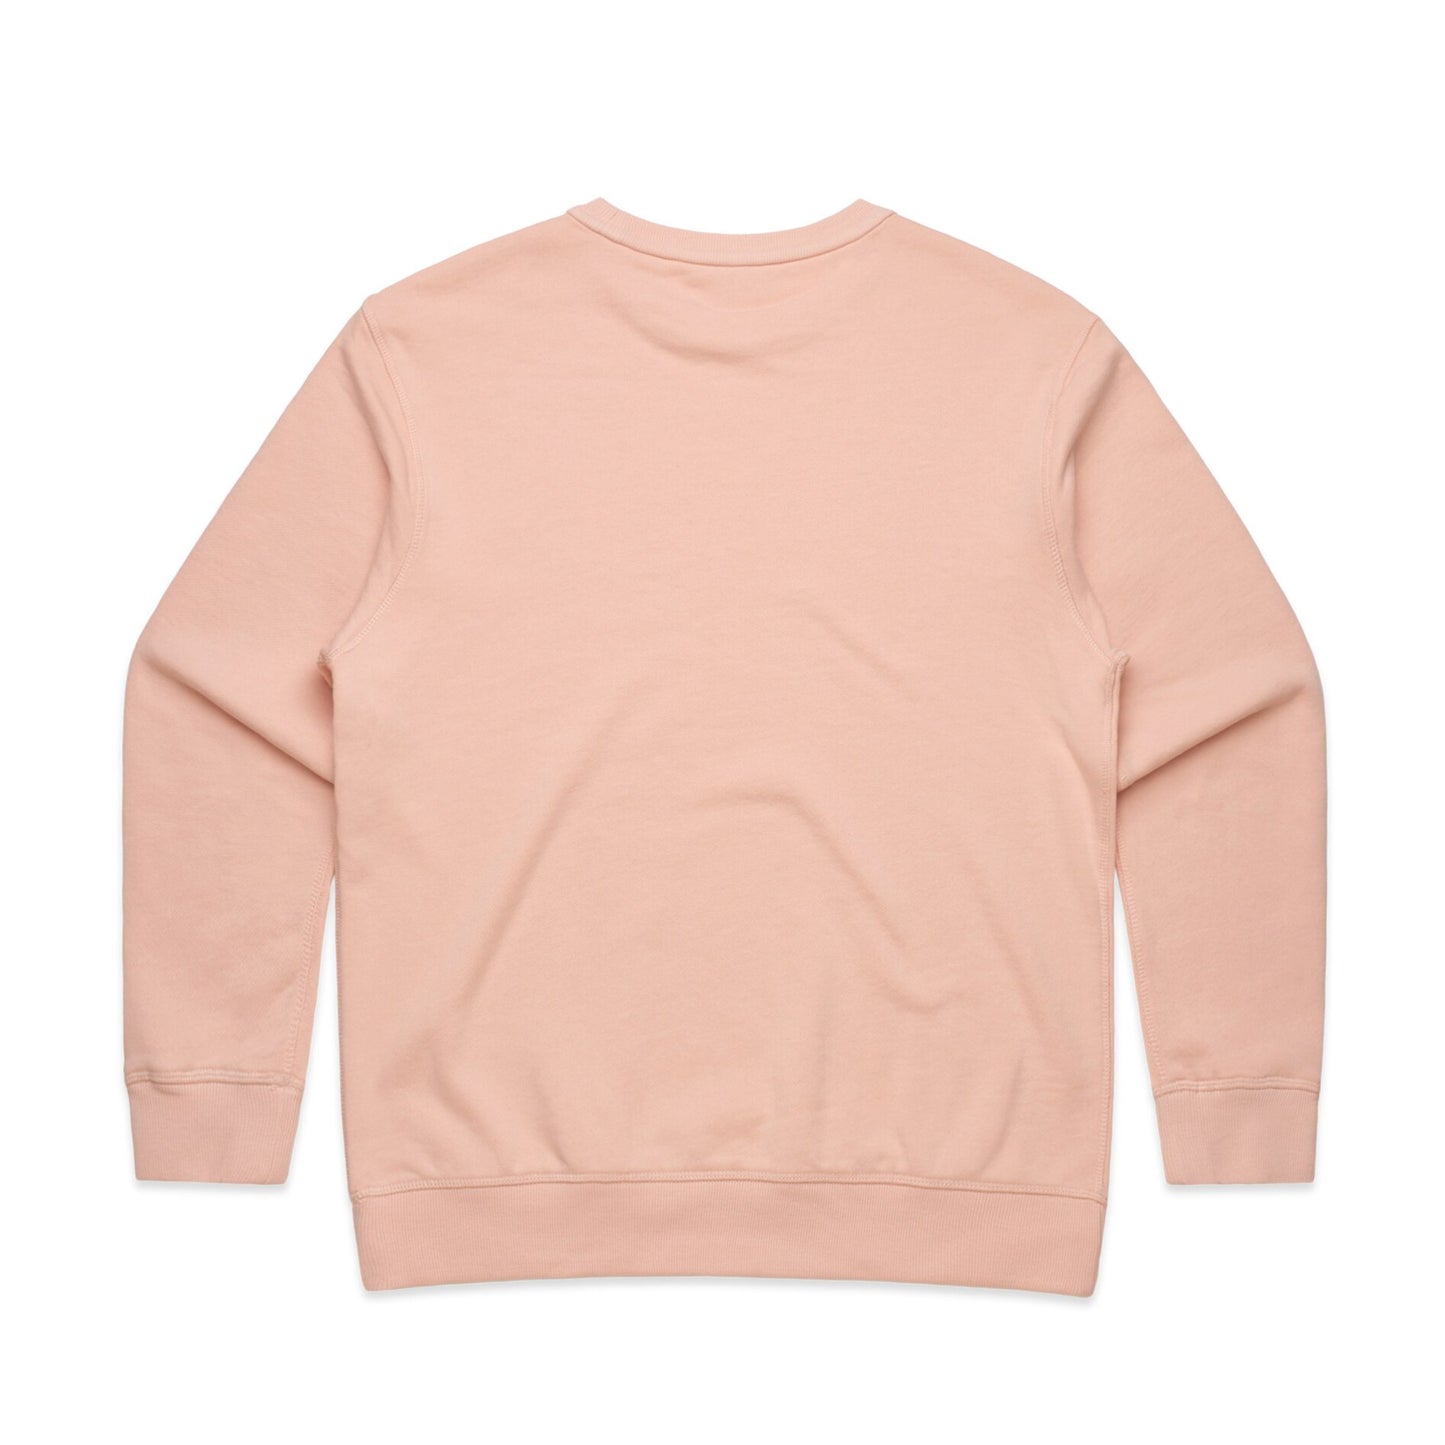 Nineplus Ladies Sweatshirt | Joplin Patch (Pale Pink)